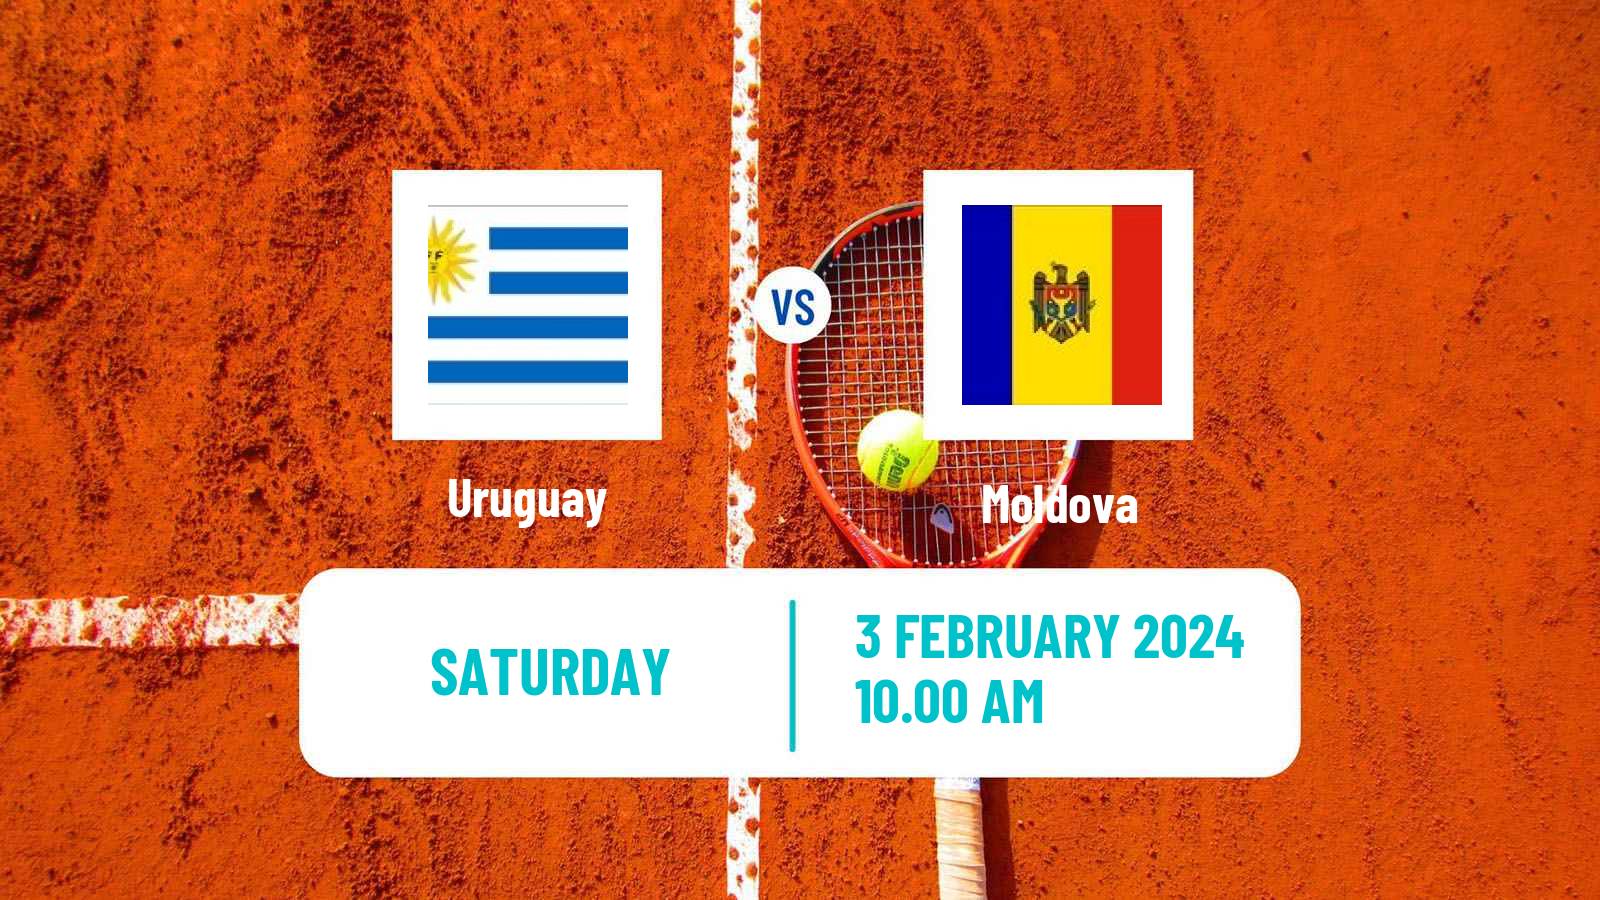 Tennis Davis Cup World Group II Teams Uruguay - Moldova